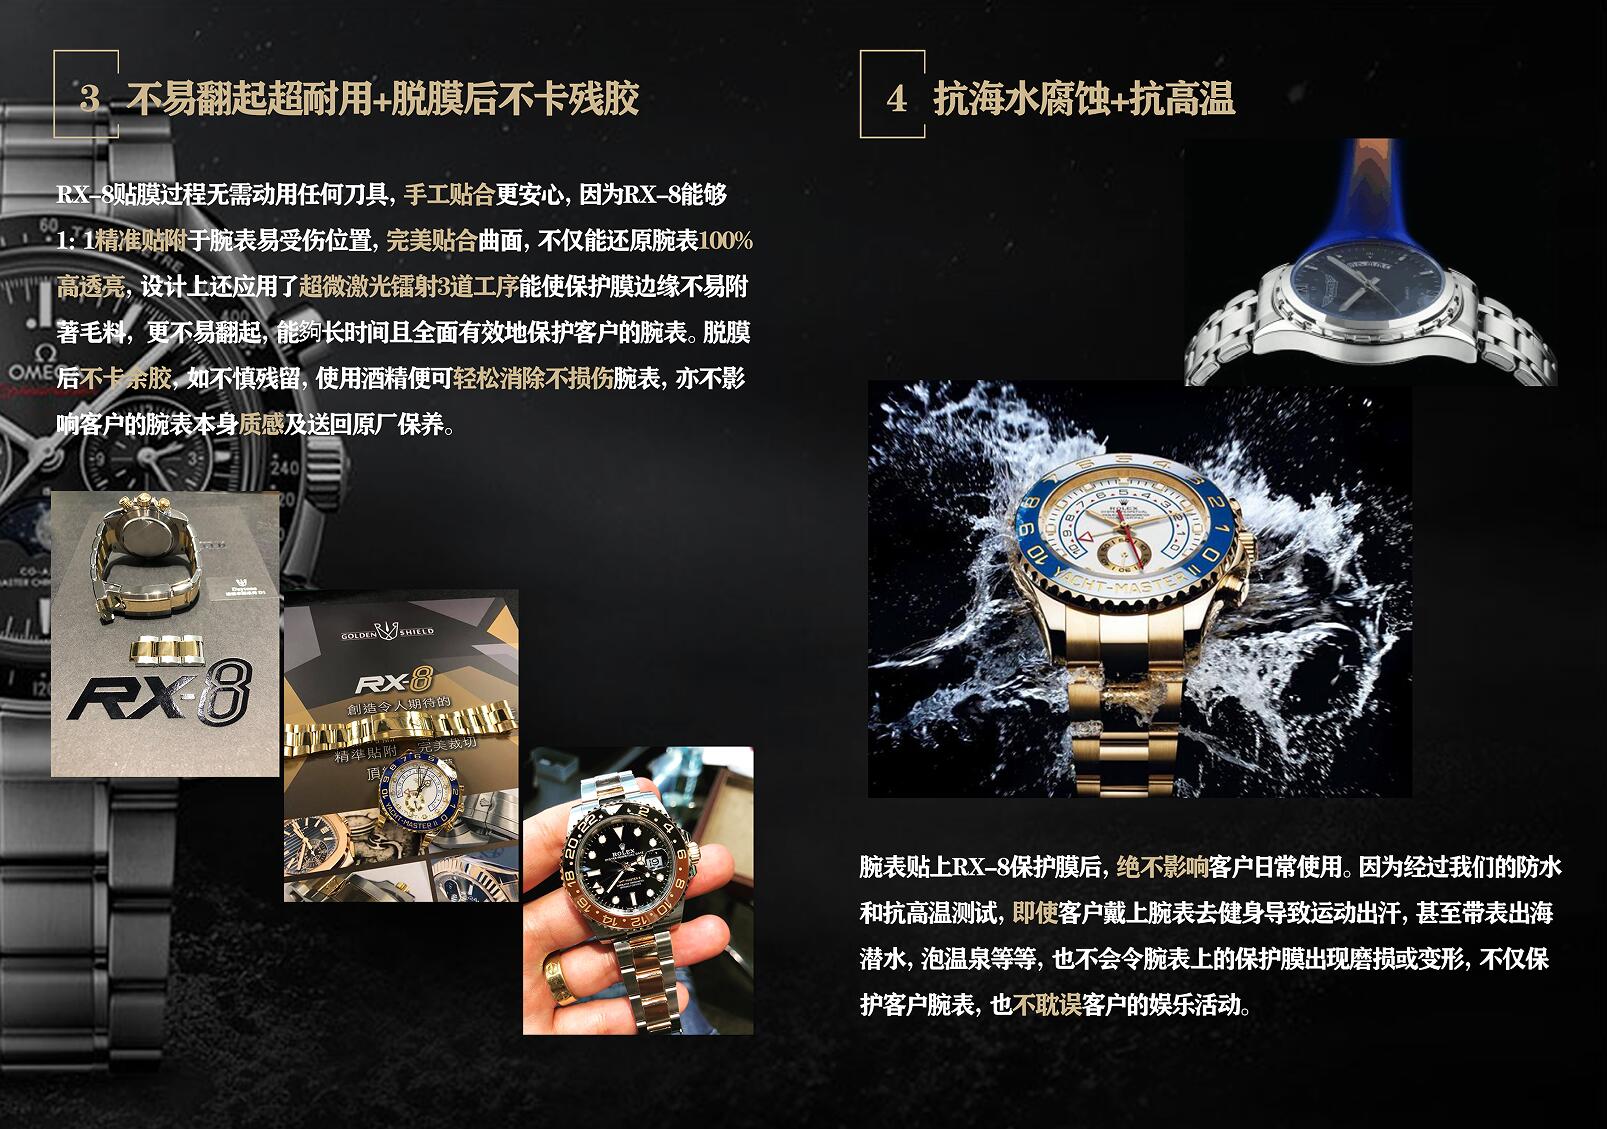 RX-8贴膜 适用于劳力士日志型手表保护膜36mm 外表圈表盘表扣